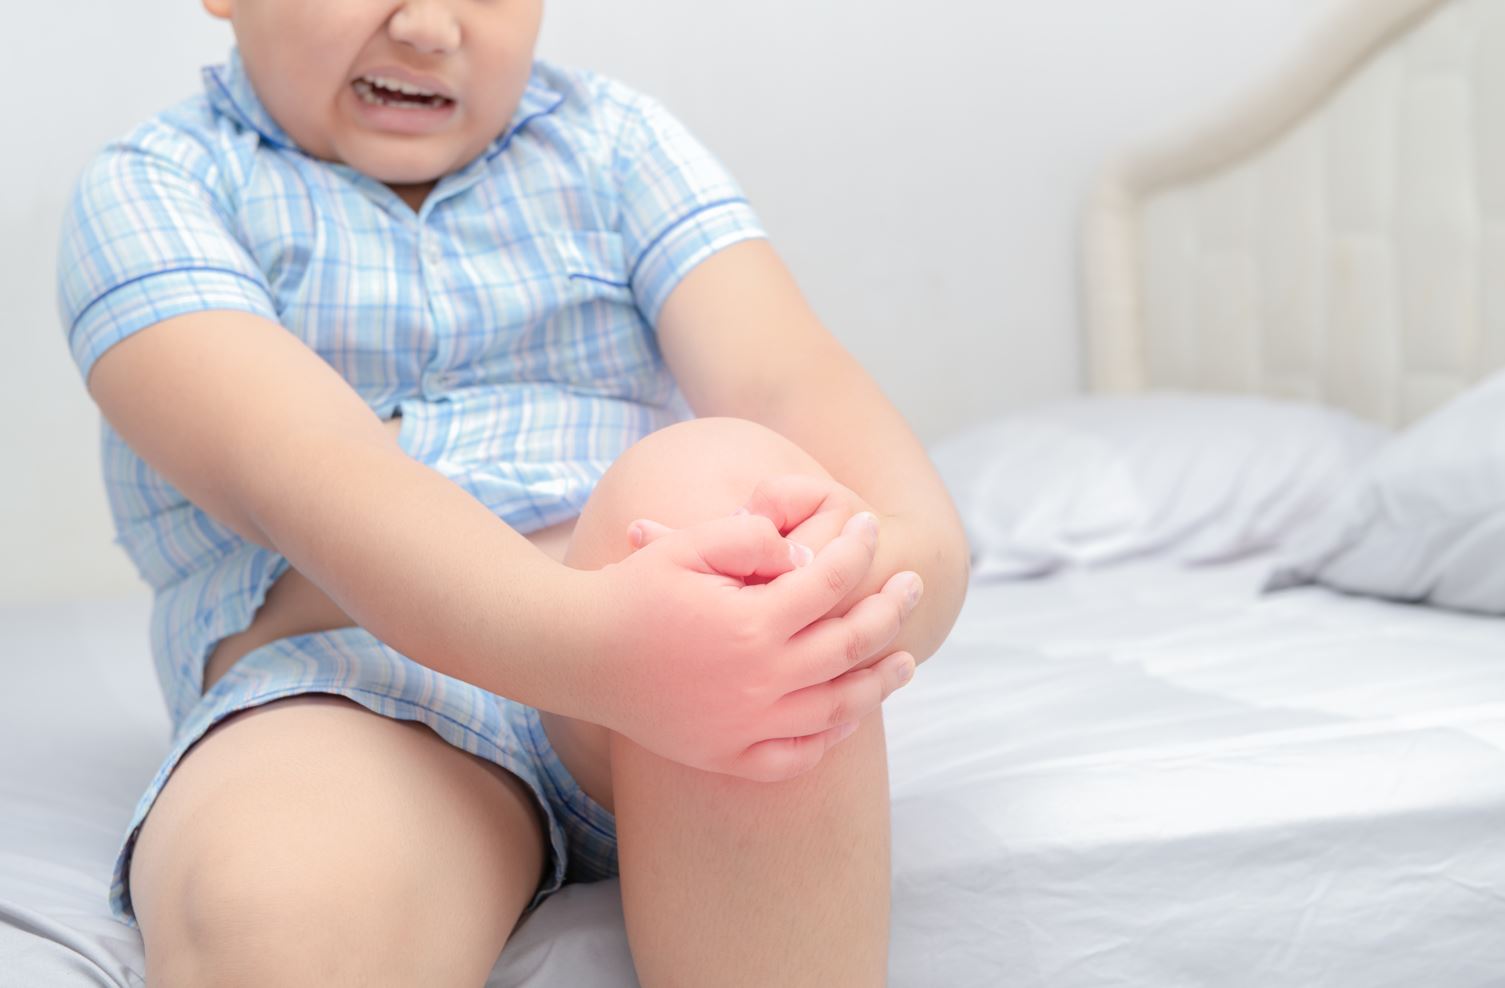 Penyakit Osgood-Schlatter menyebabkan sakit lutut pada kanak-kanak.